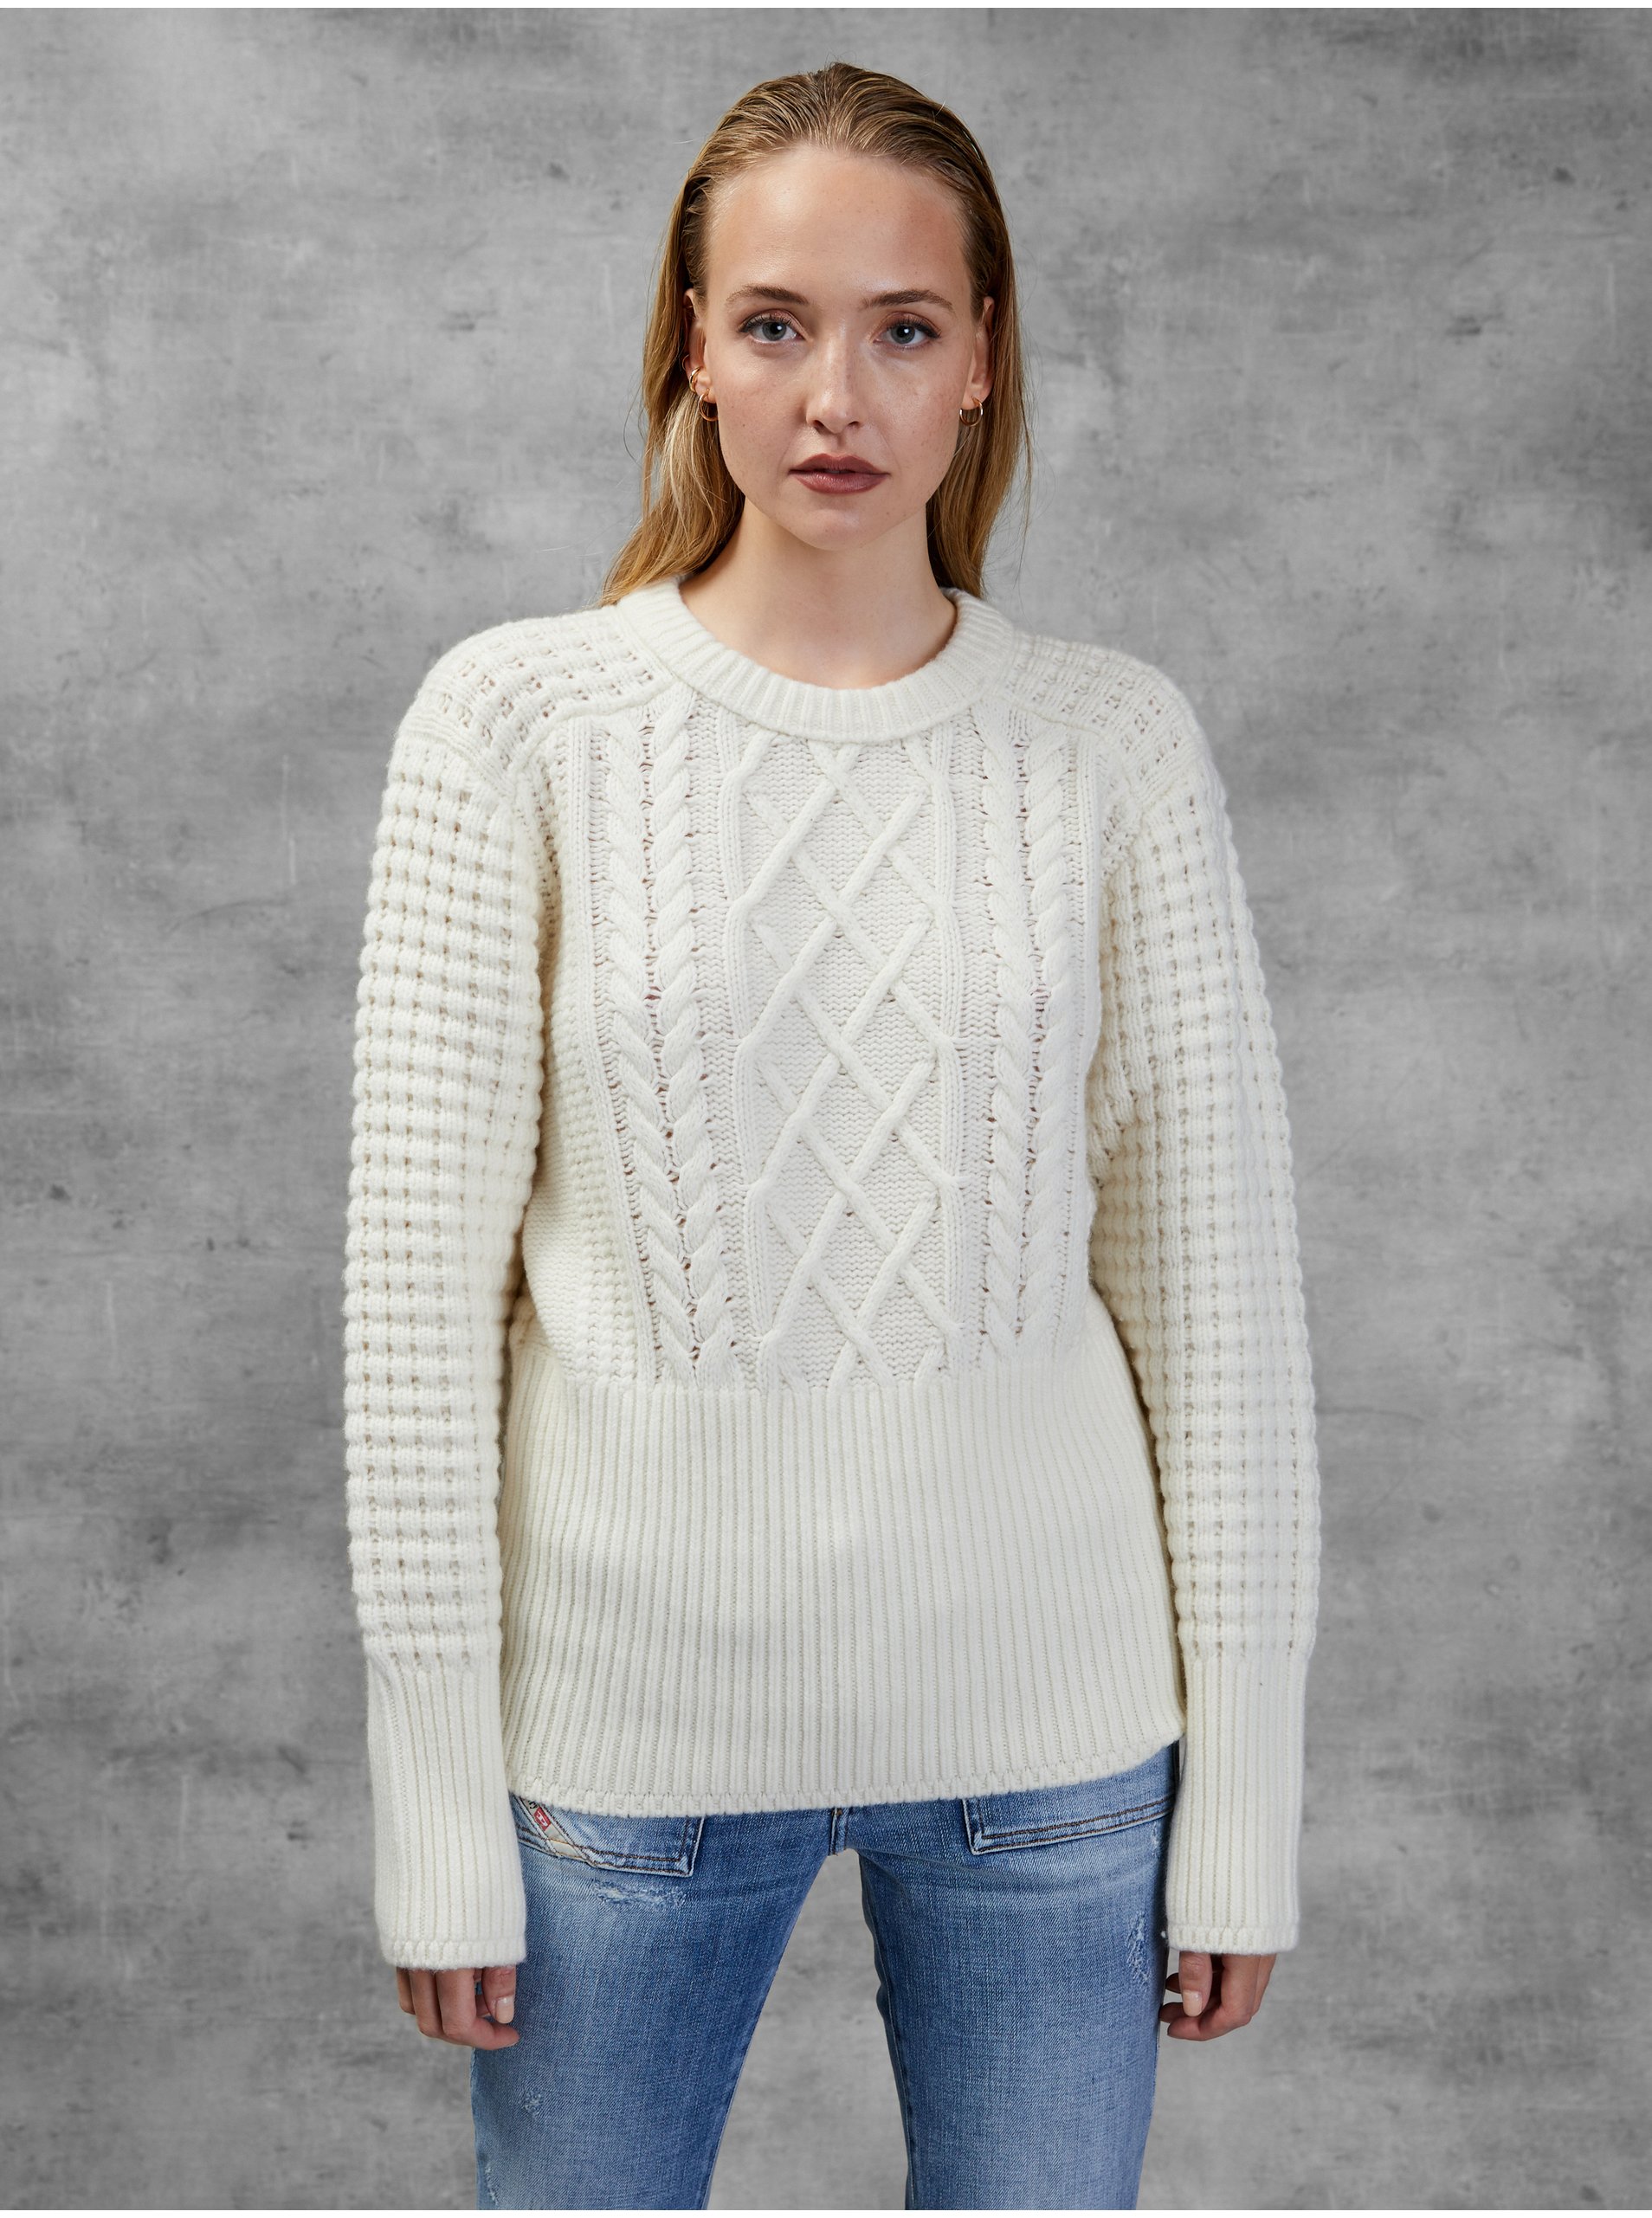 White Women's Wool Sweater with Braids Diesel - Women